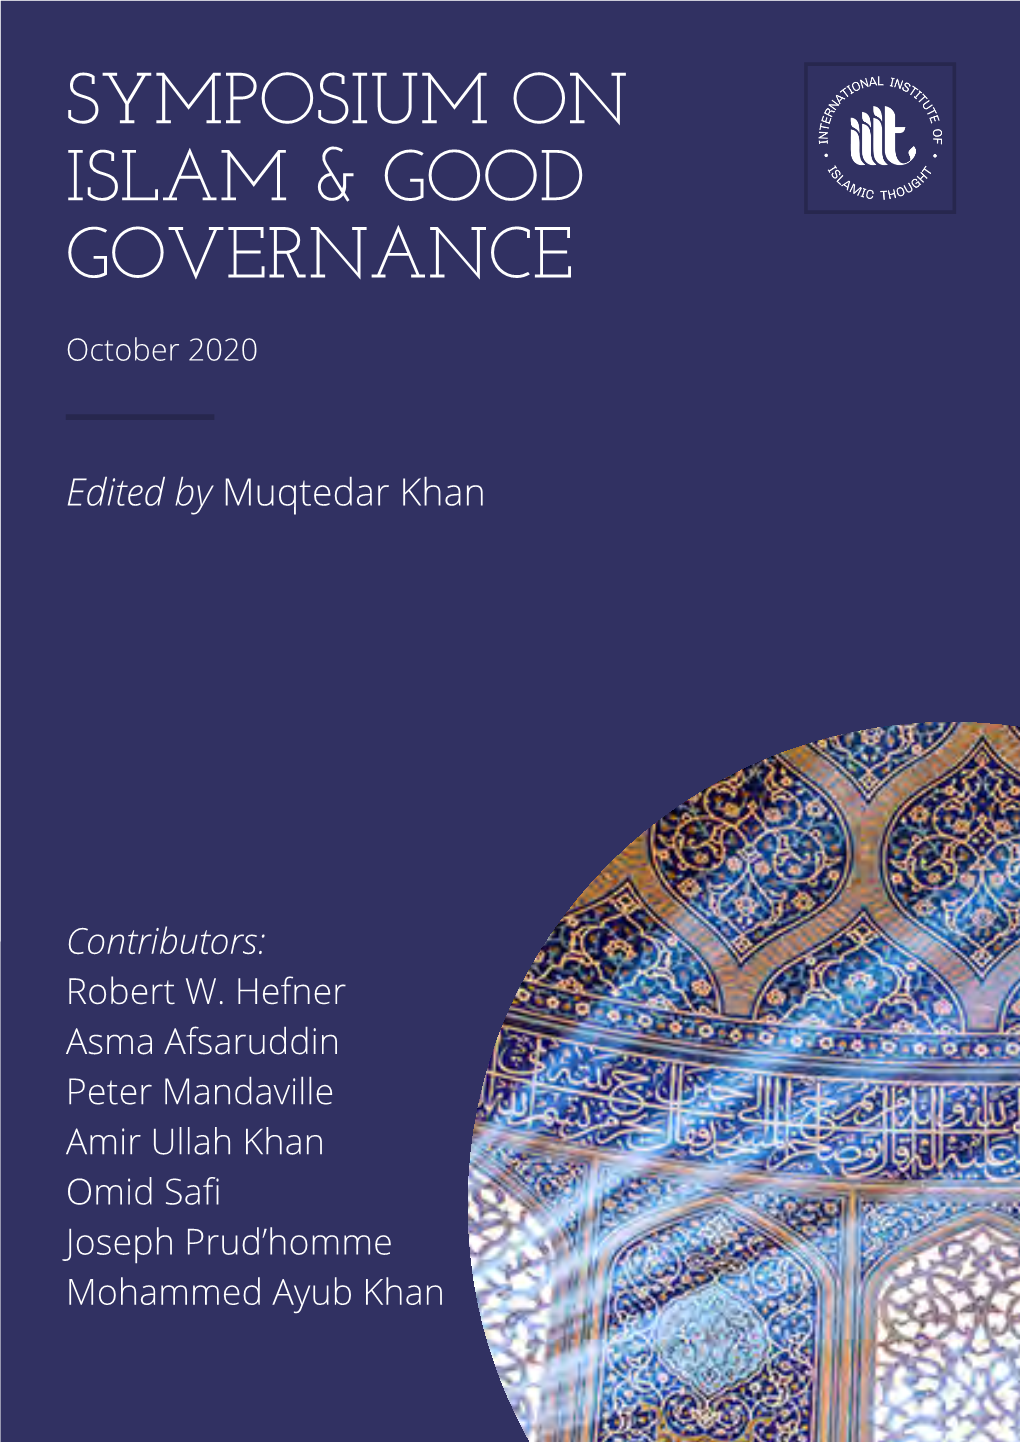 Symposium on Islam & Good Governance